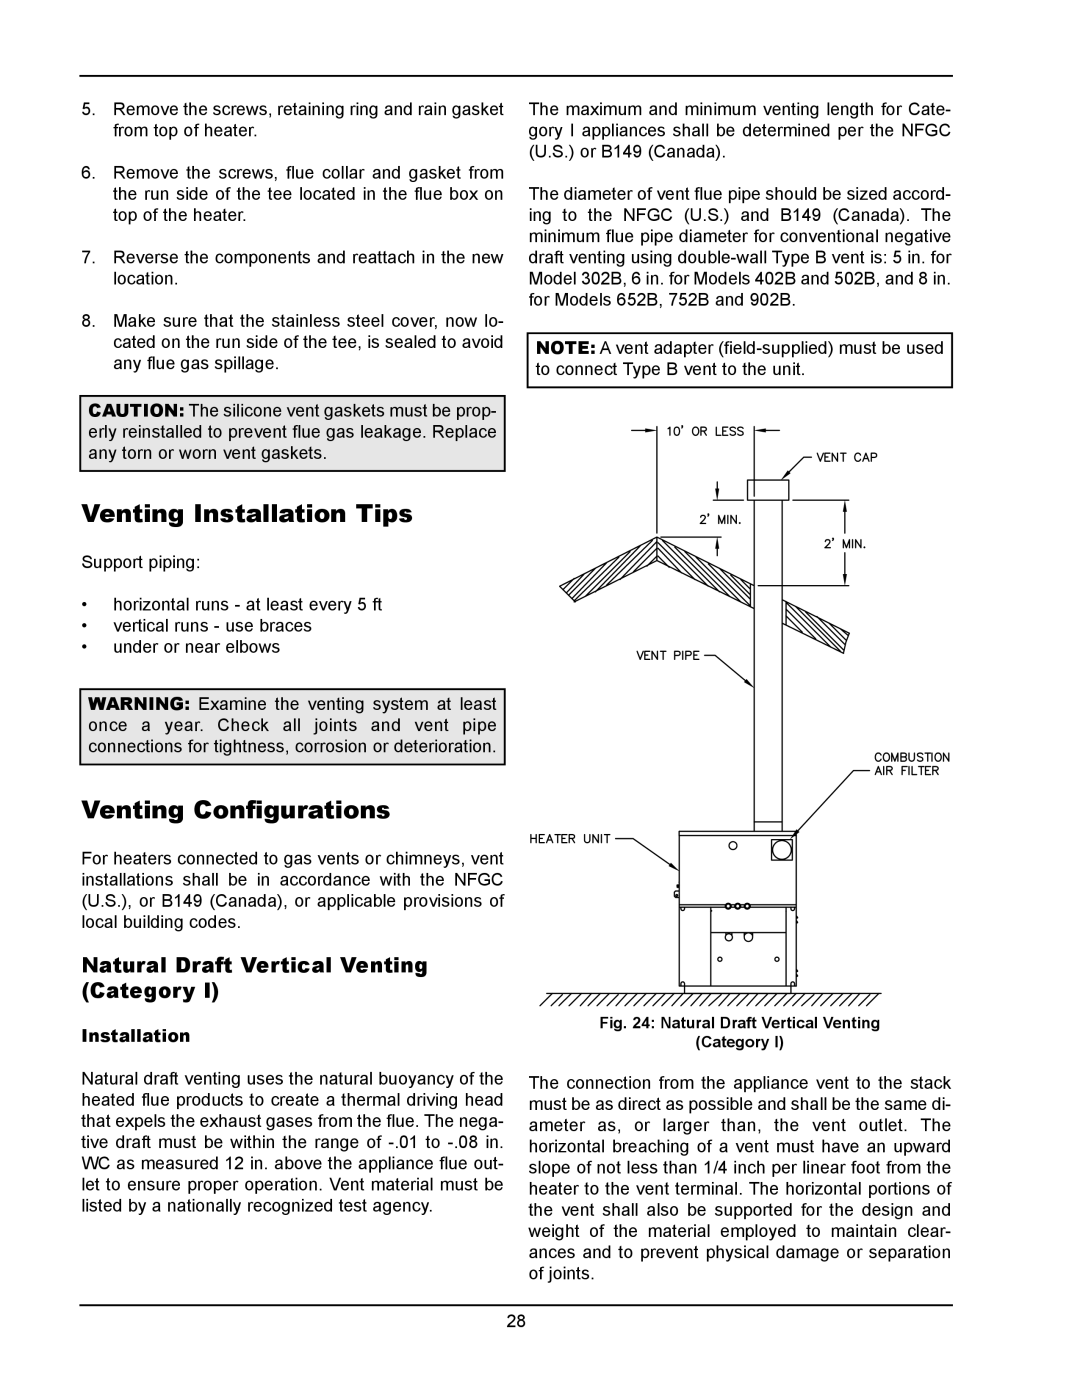 Raypak 902B, 302B manual Venting Installation Tips, Venting Configurations, Natural Draft Vertical Venting Category 